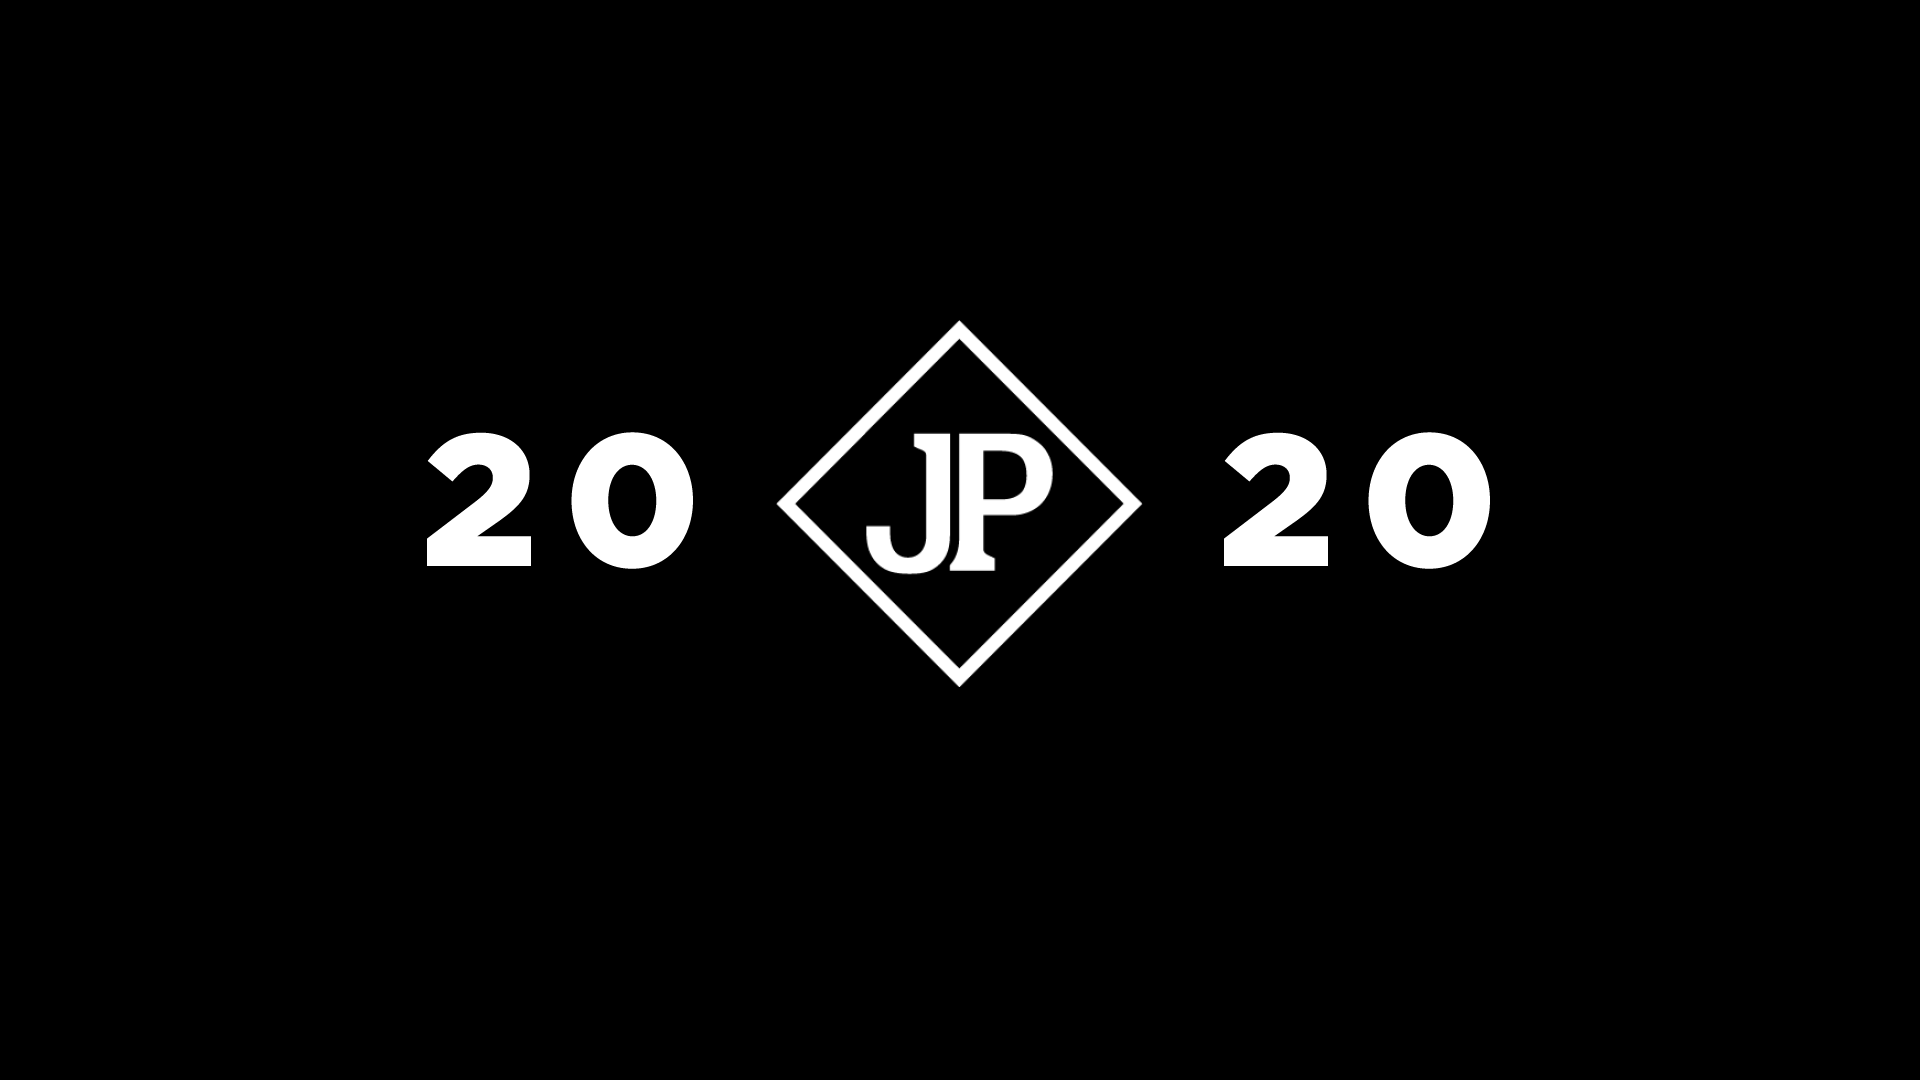 Jack Porter logo and 2020 date